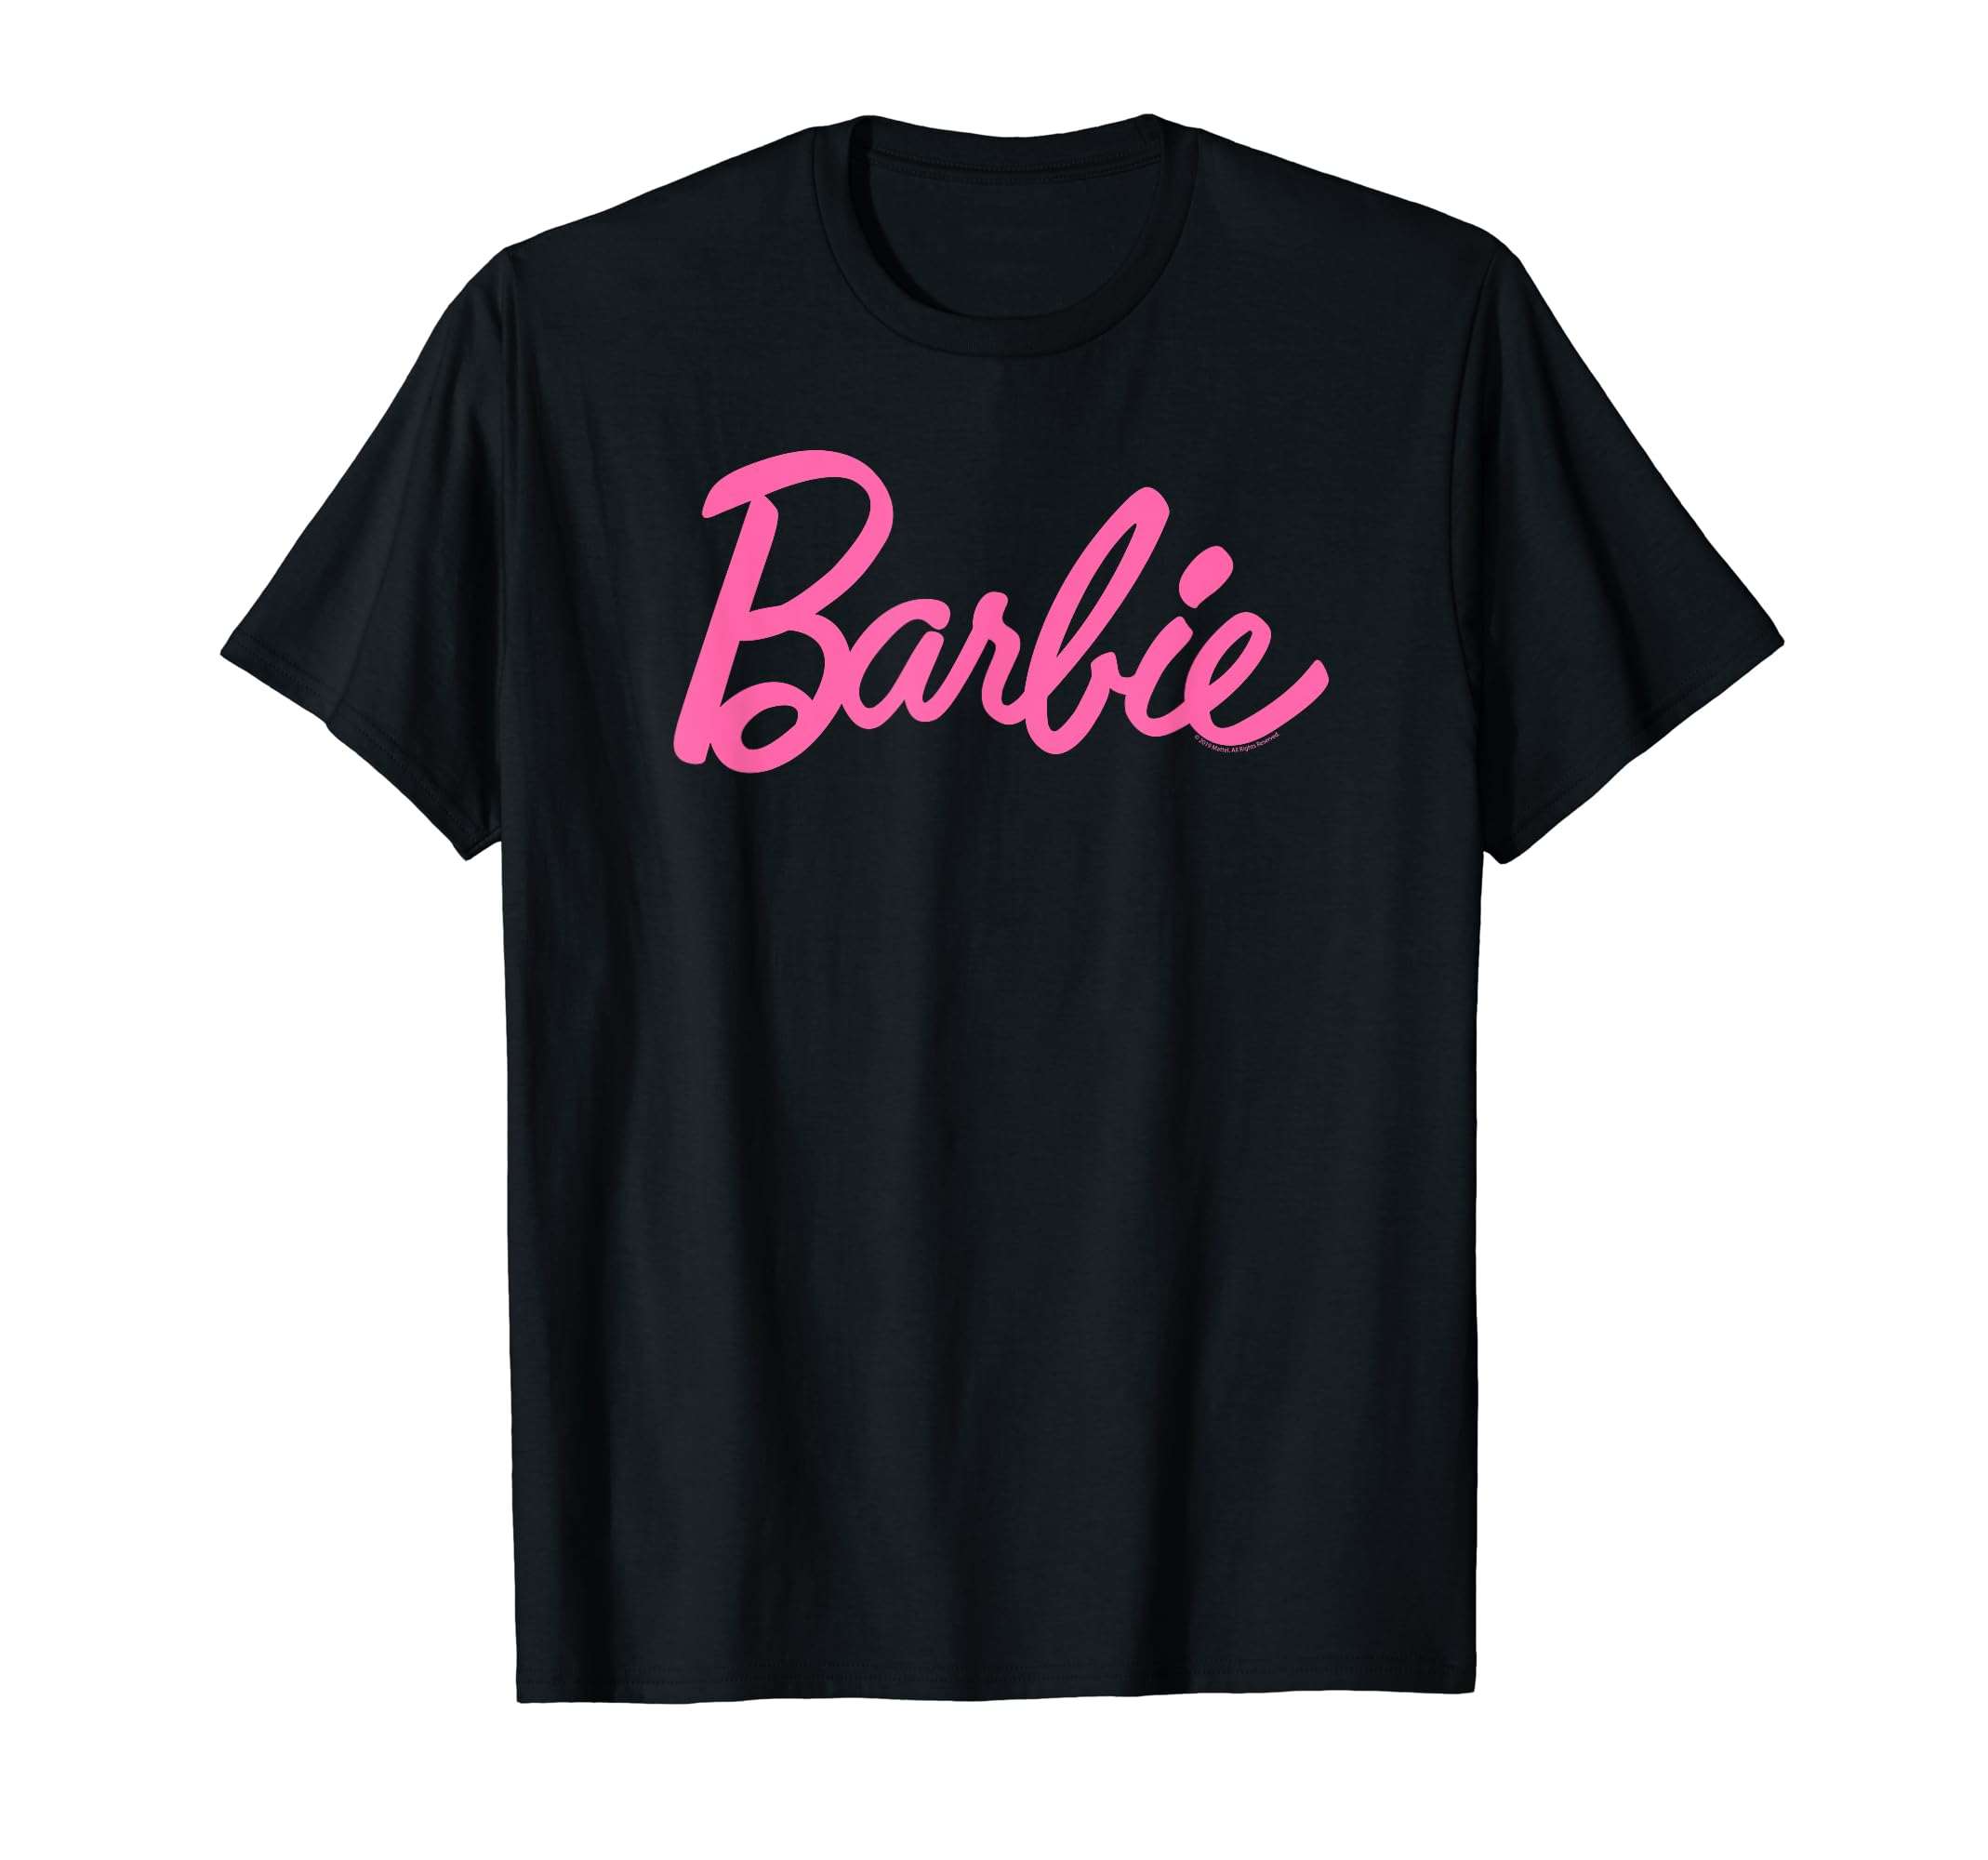 Barbie - Classic Logo T-Shirt